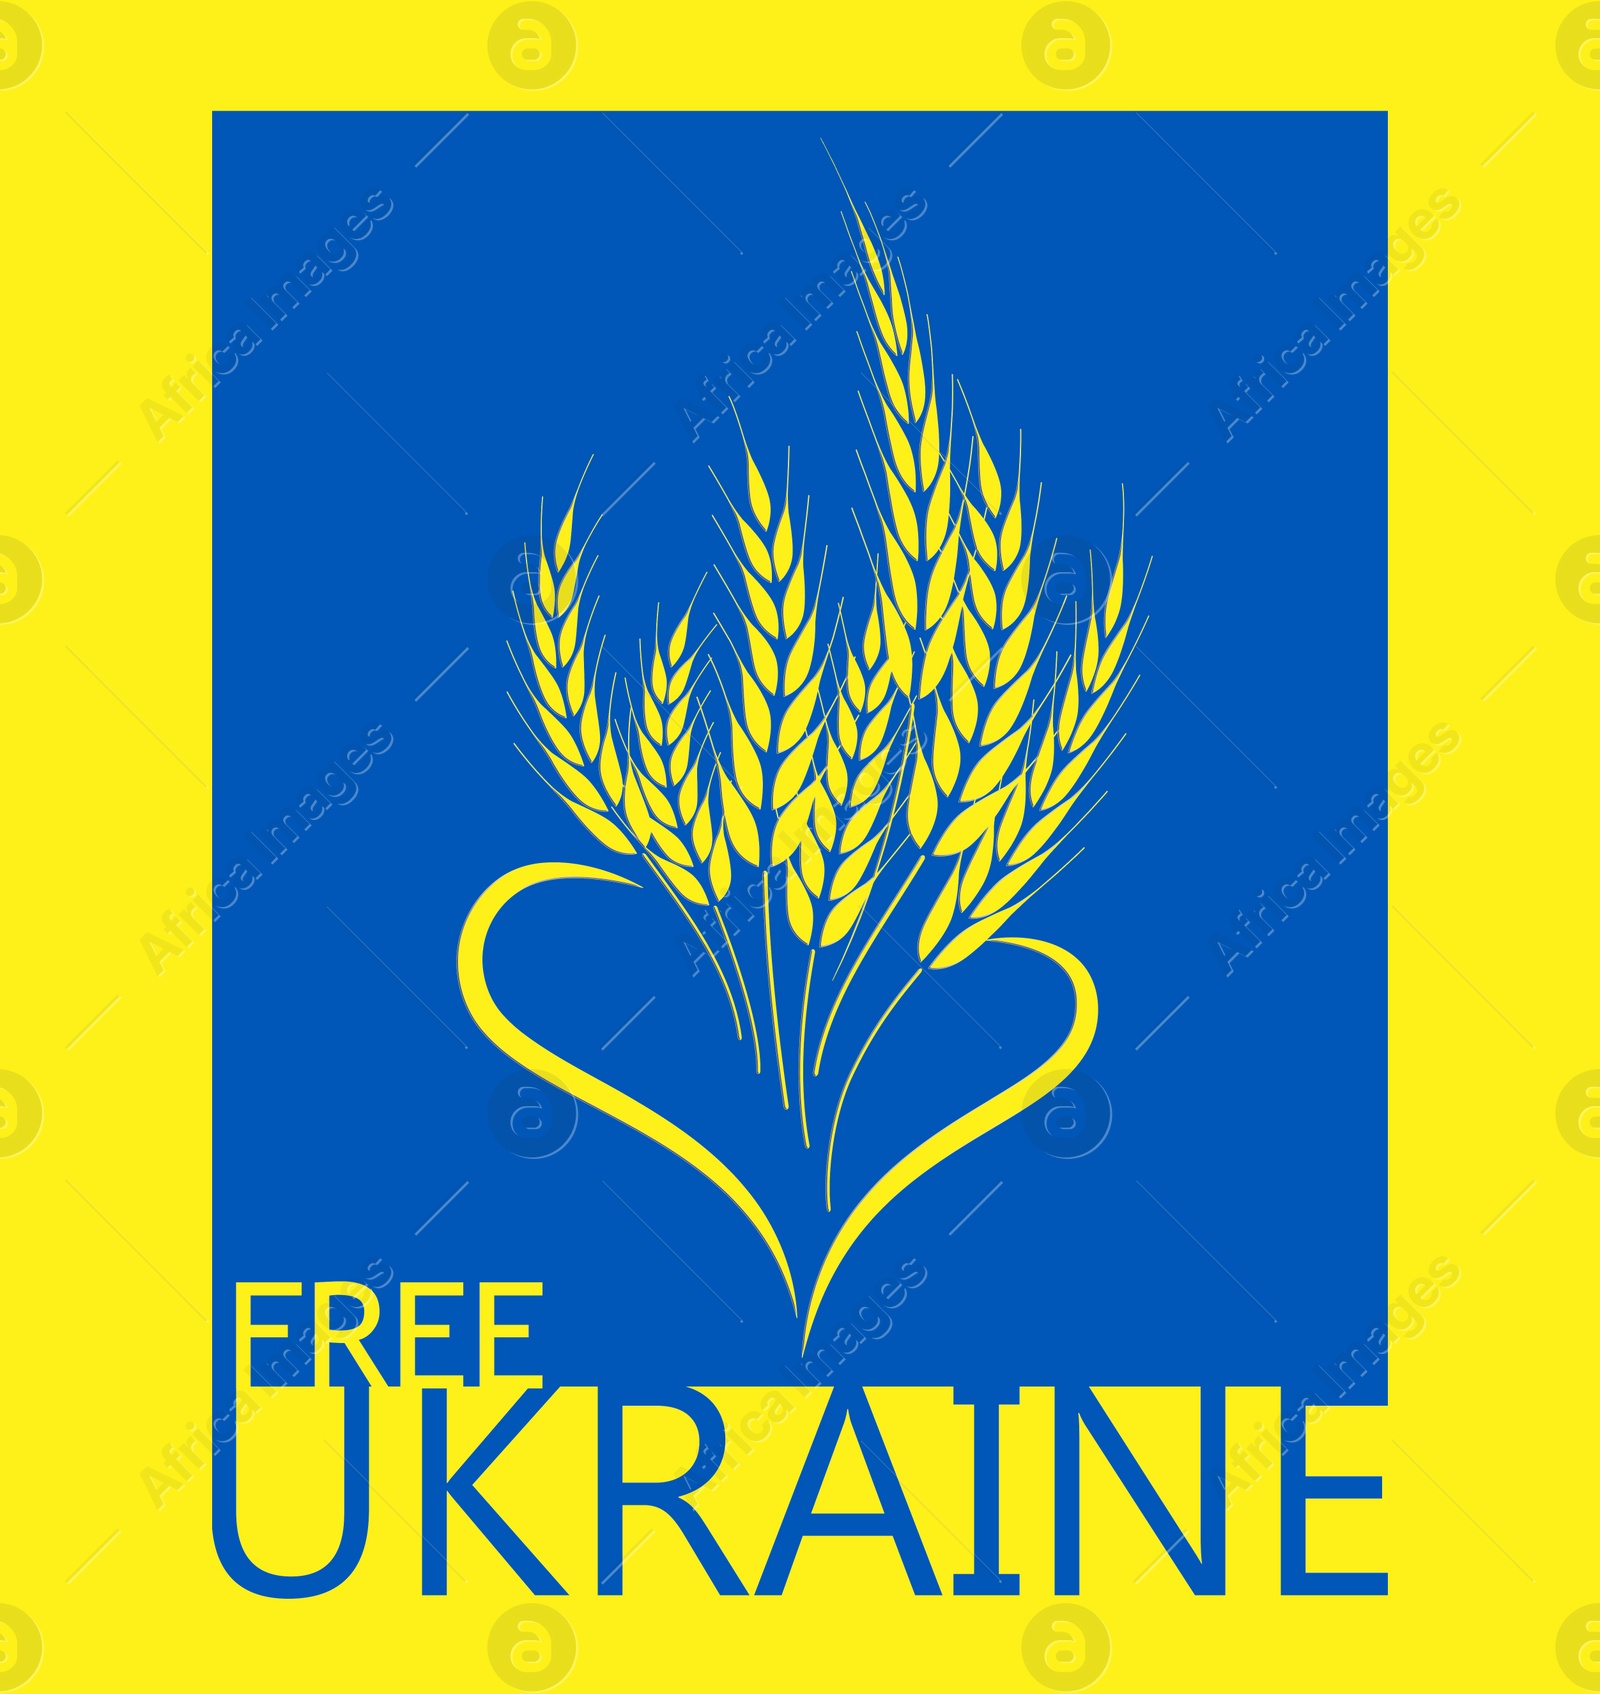 Illustration of Free Ukraine. Phrase and ears of wheat illustration in colors of Ukrainian flag